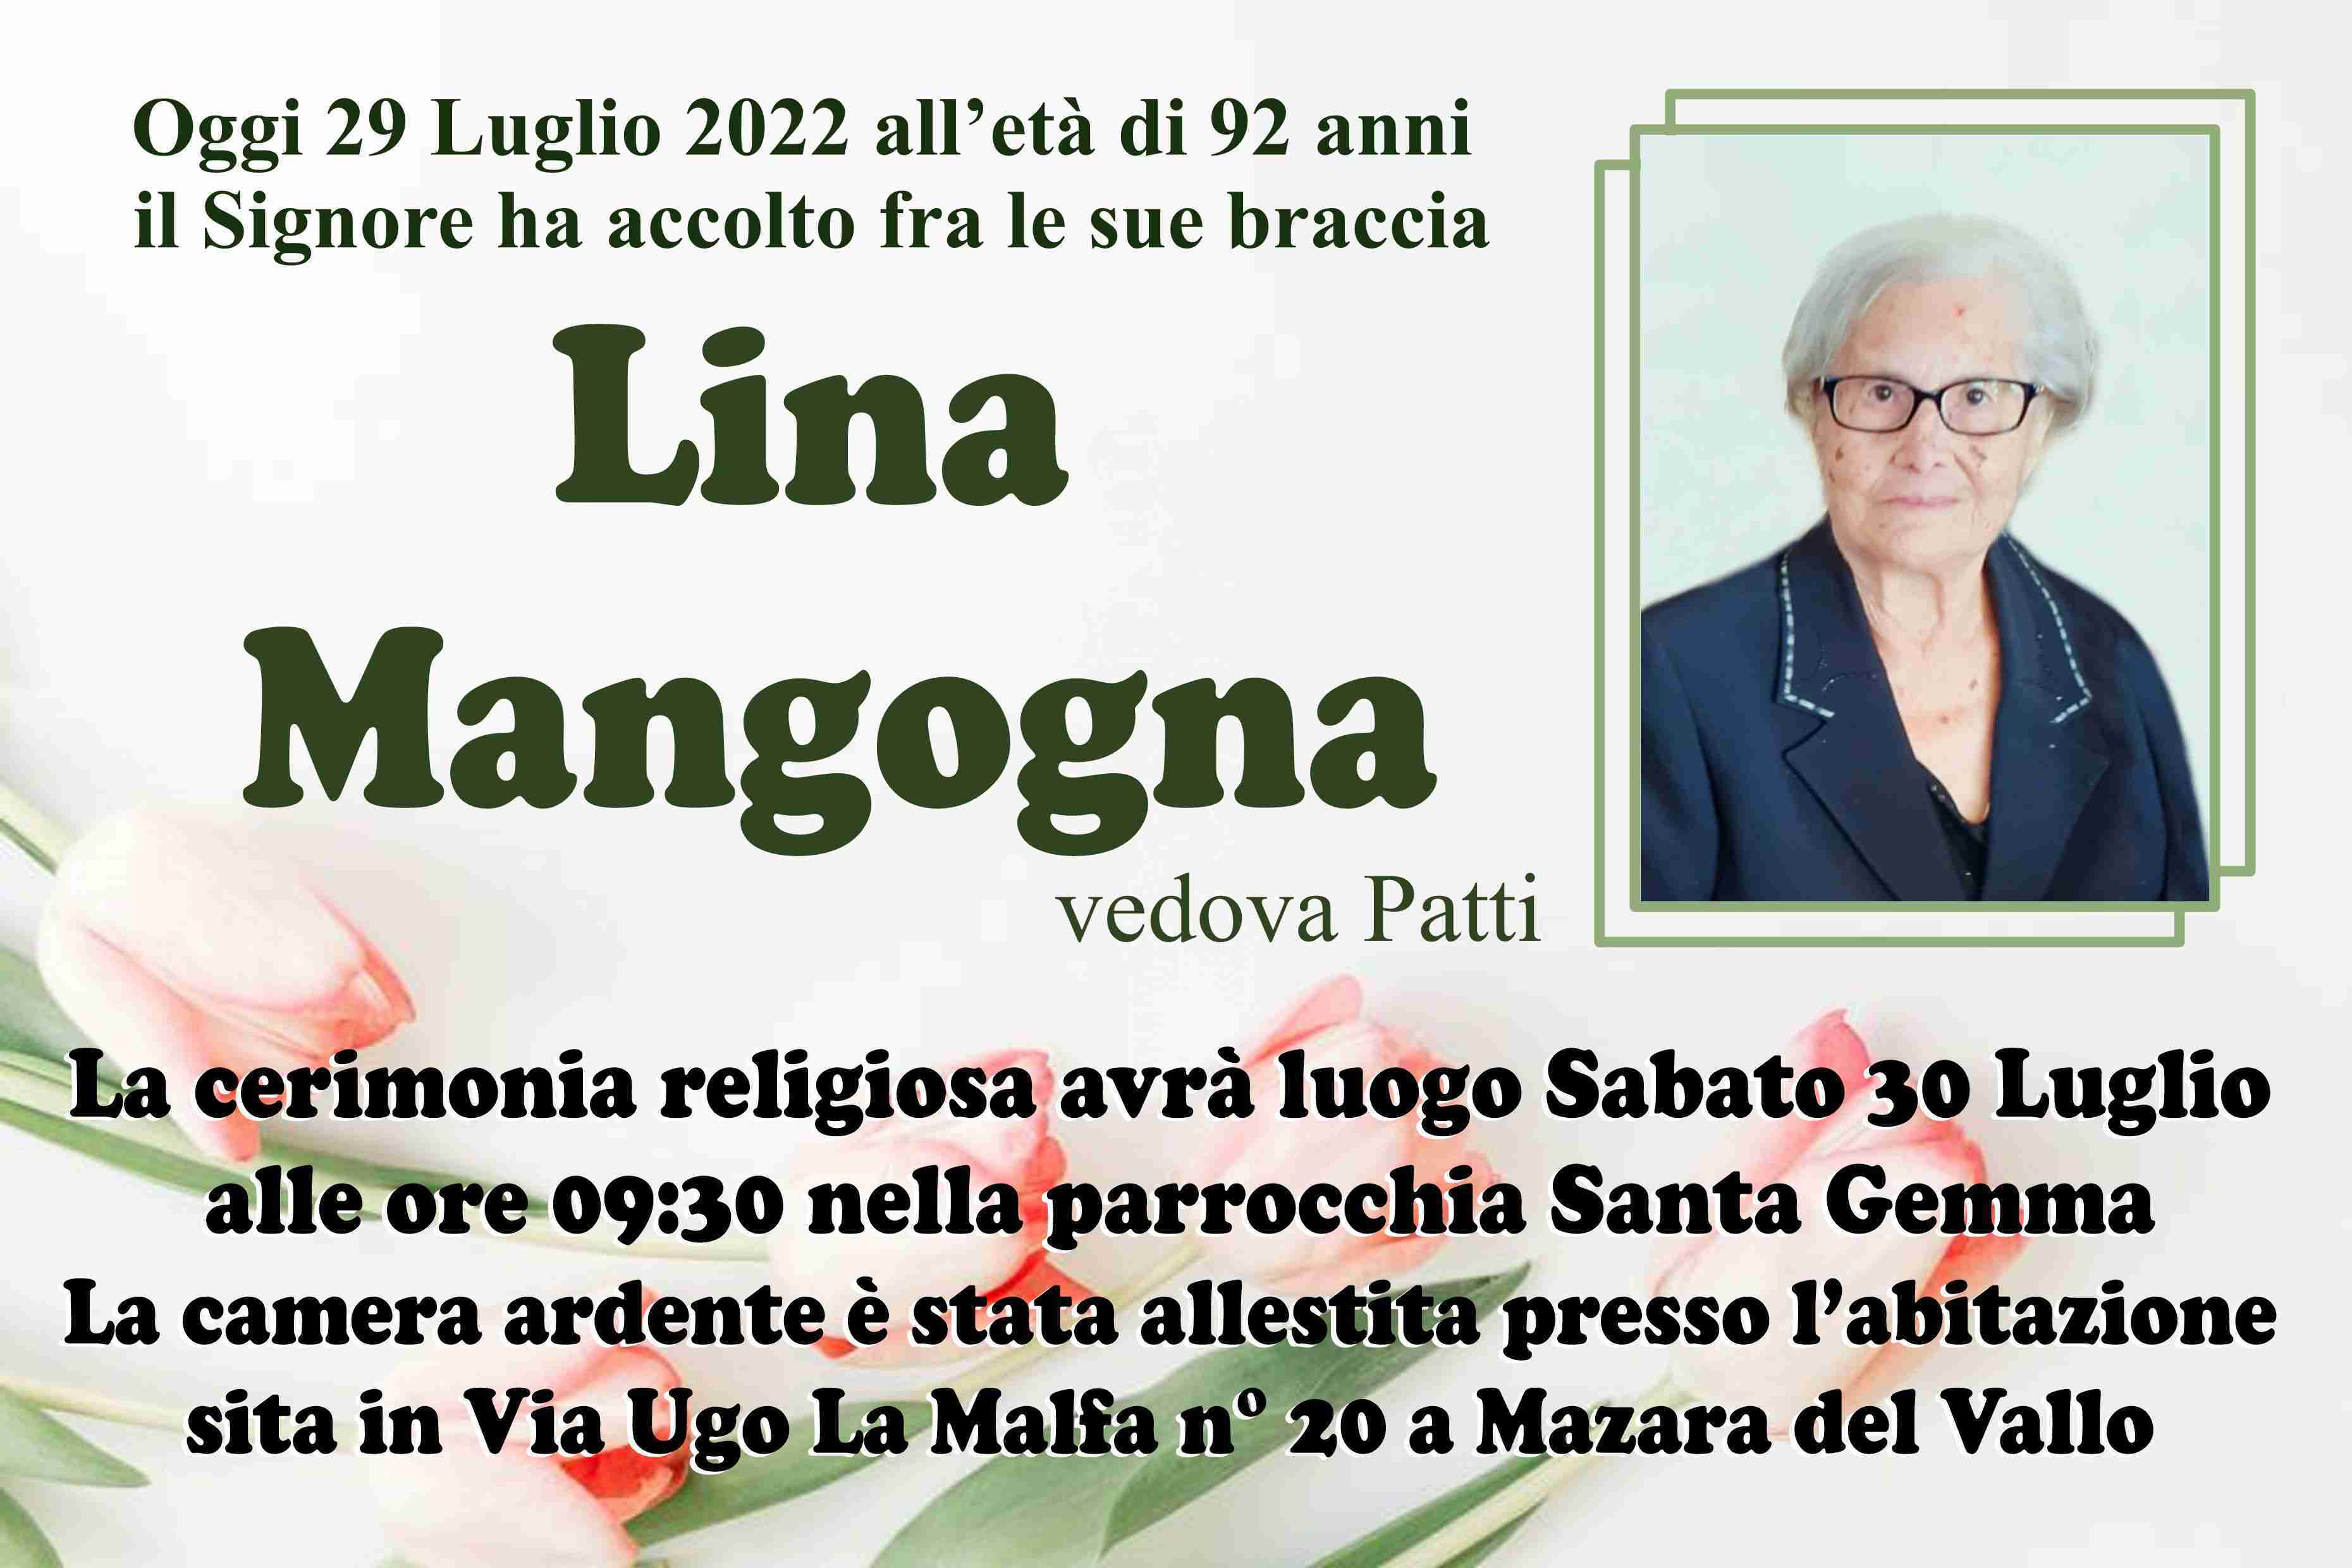 Maddalena Mangogna